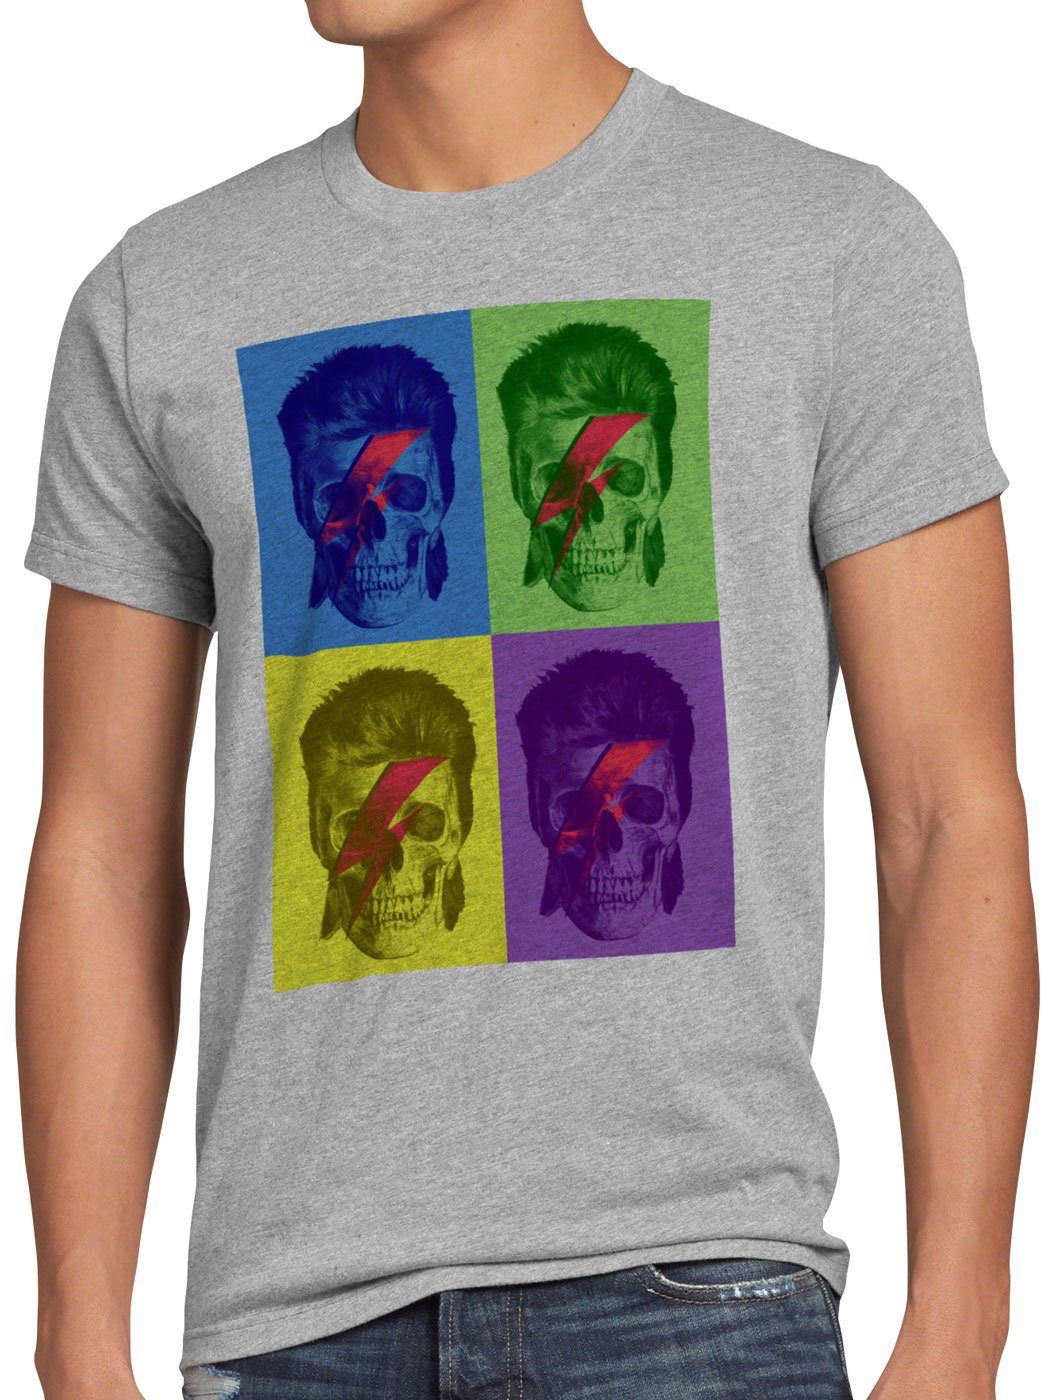 style3 Print-Shirt Herren T-Shirt Bowie Skull turntable retro pop-art warhol grau meliert